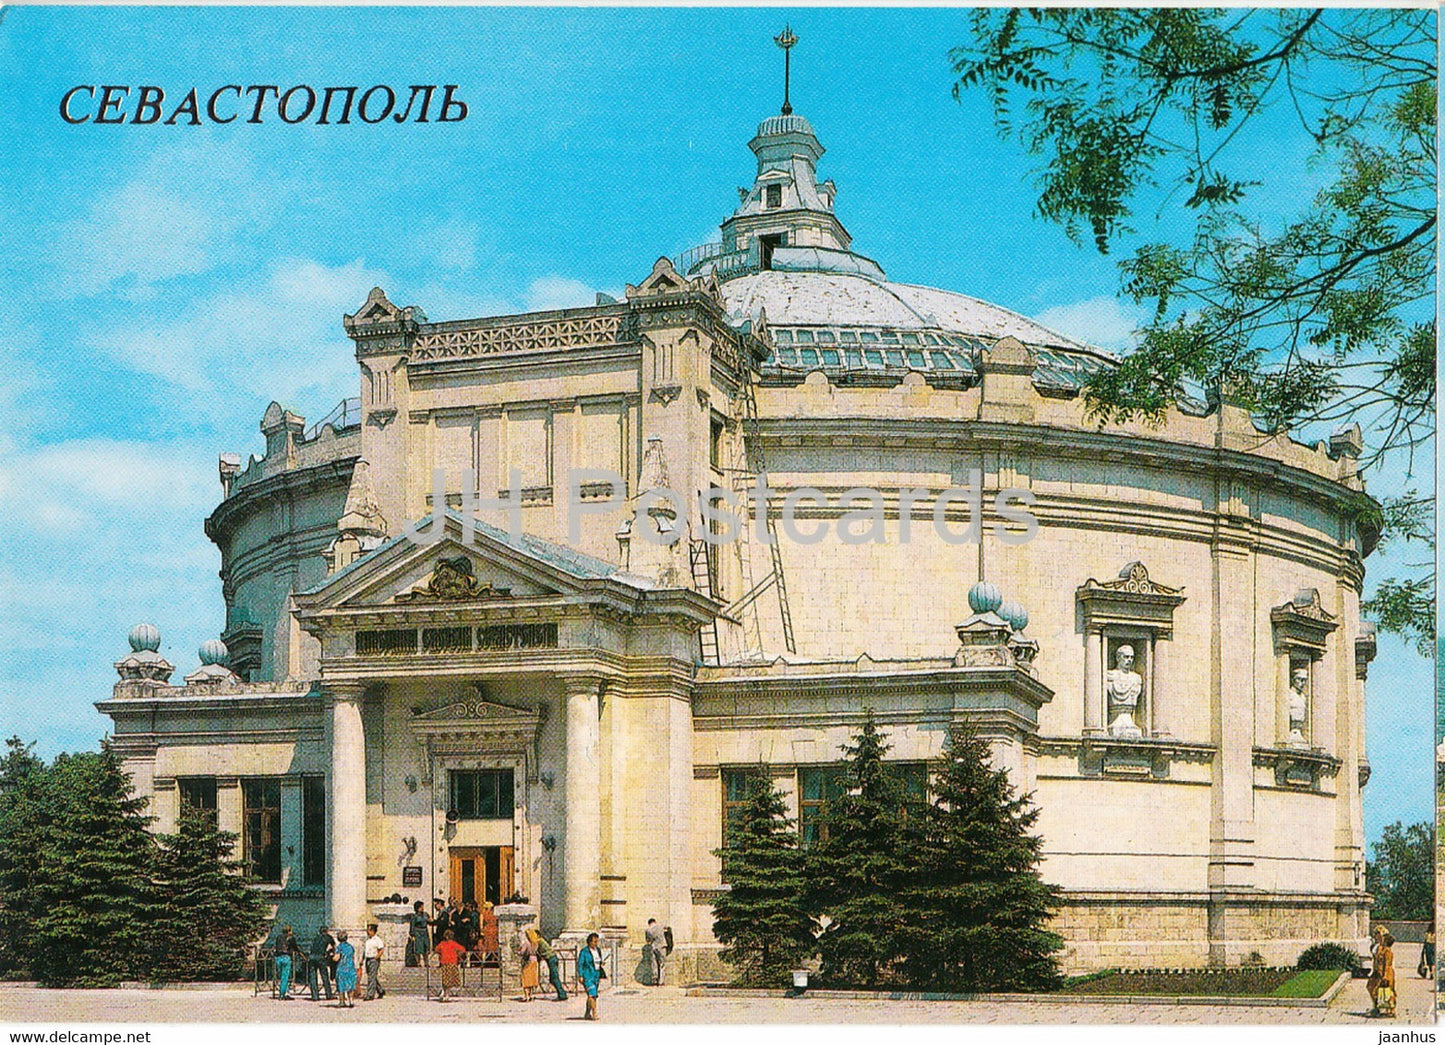 Sevastopol - Building Housing The Panorama Defense of Sevastopol 1854-55 - 1989 - Ukraine USSR - unused - JH Postcards